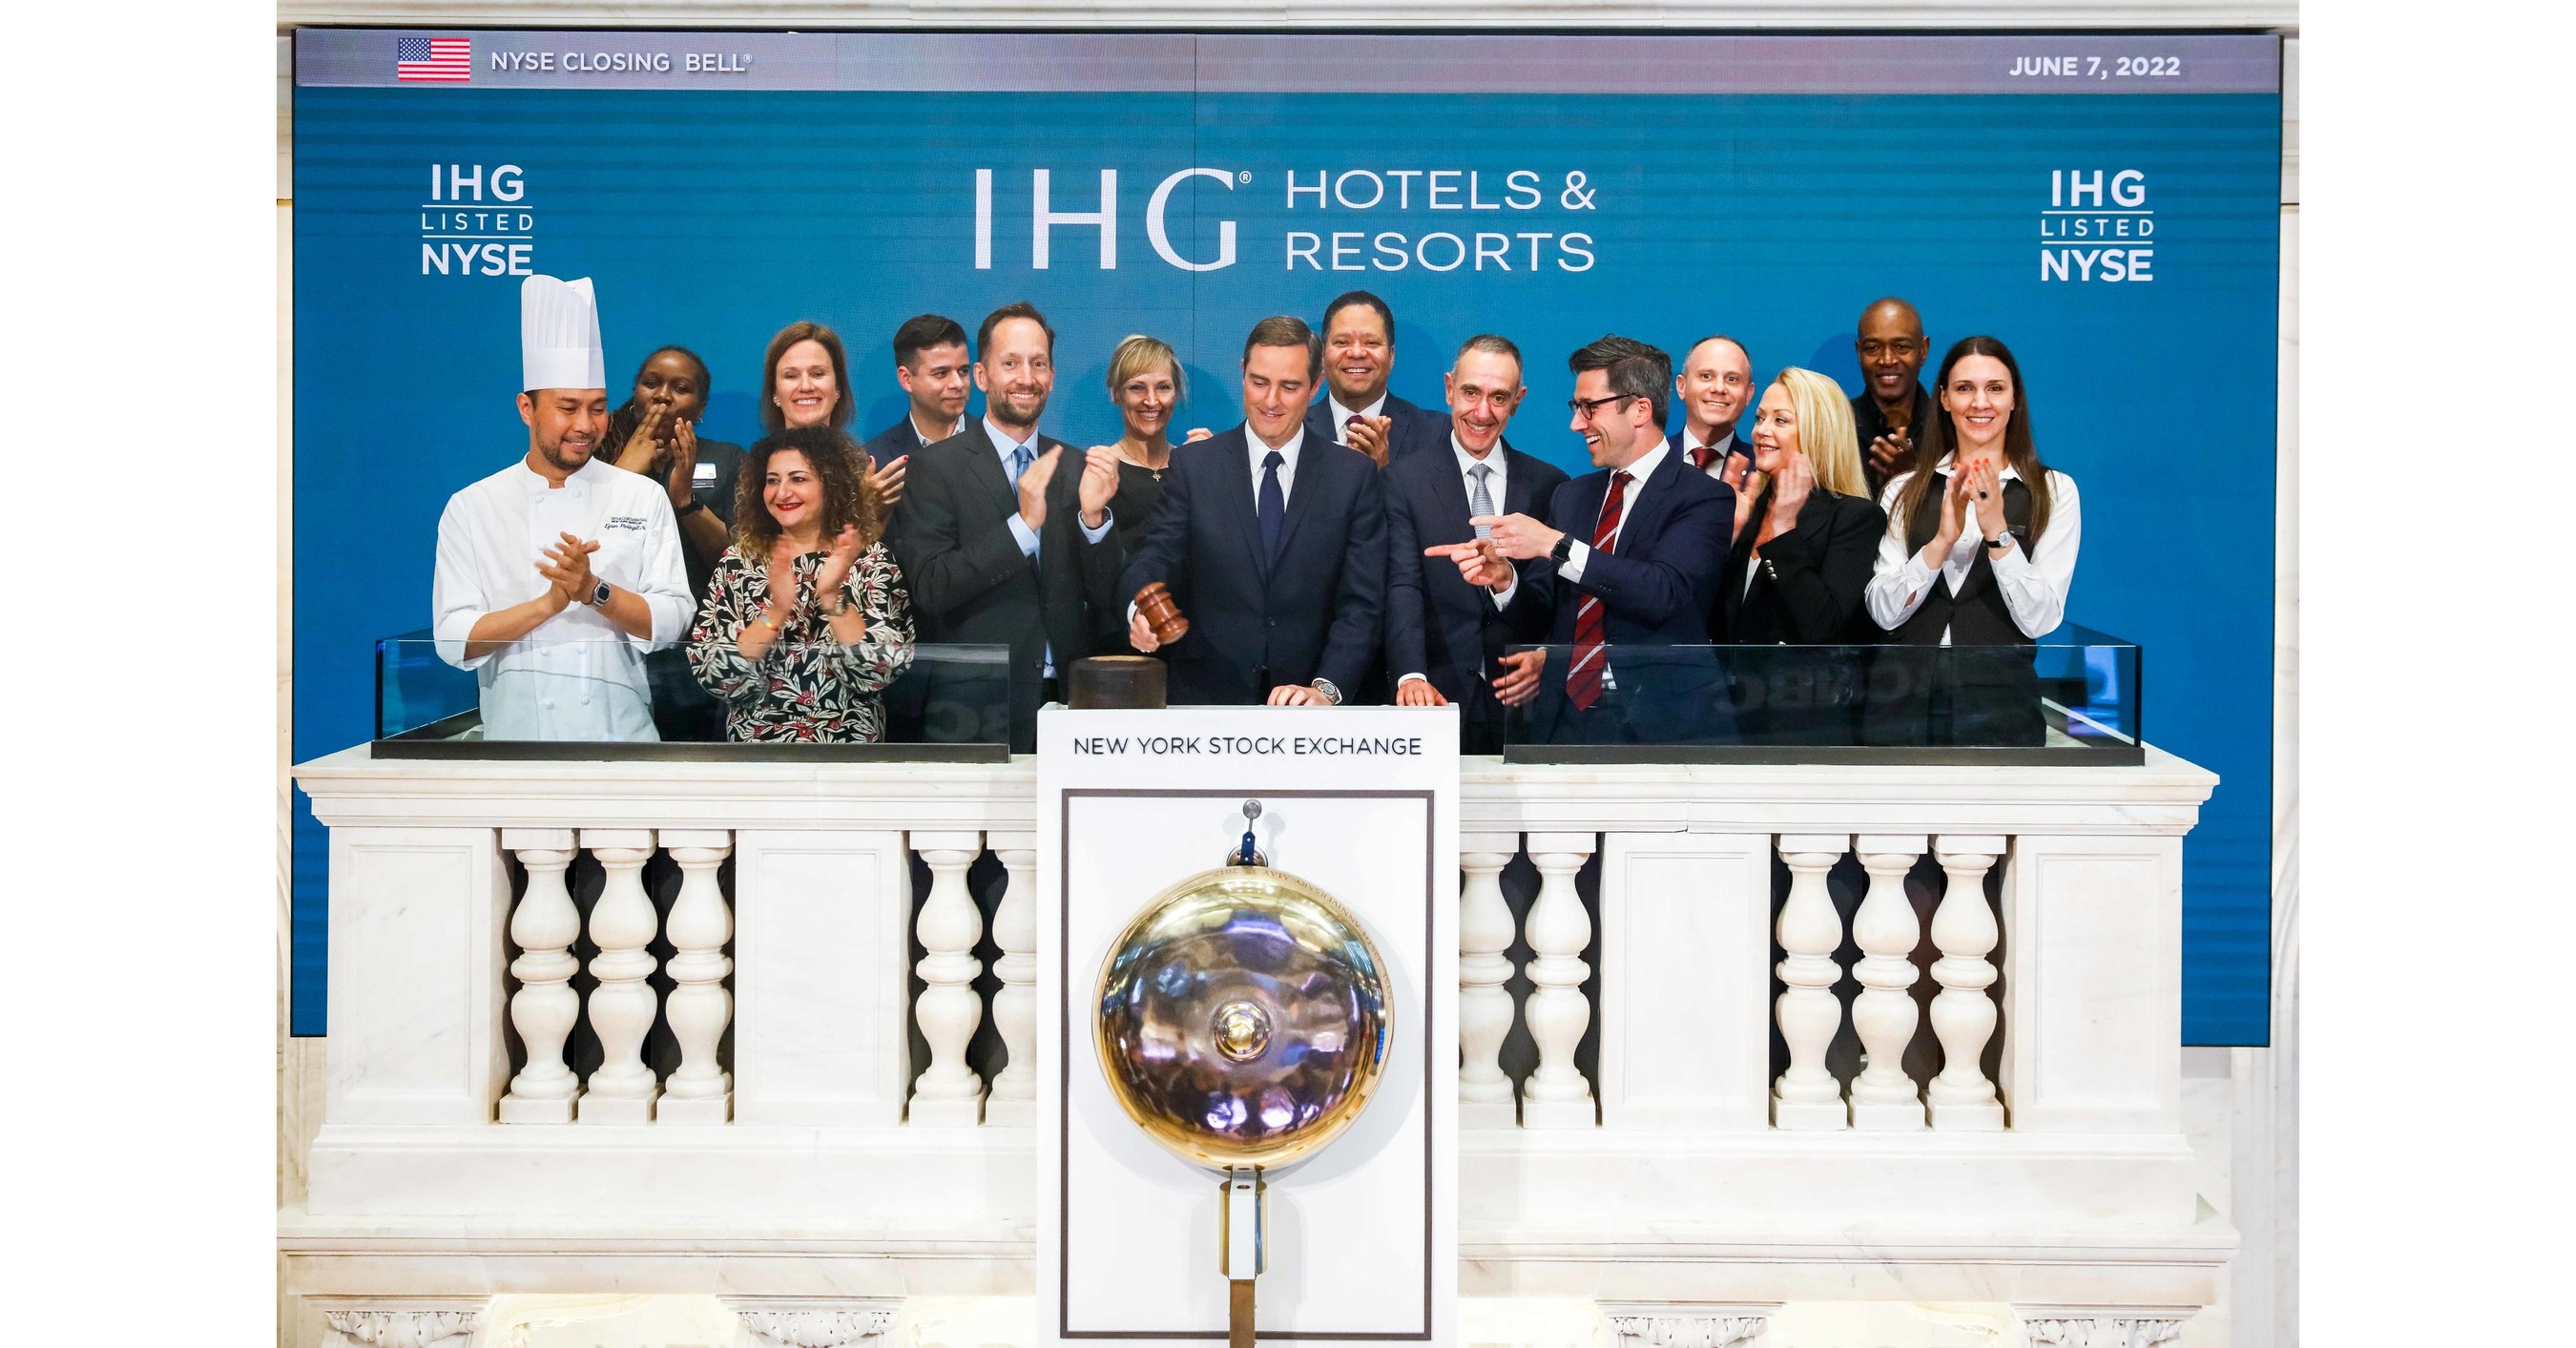 IHG Hotels & Resorts marks 6,000 hotels milestone with spectacular